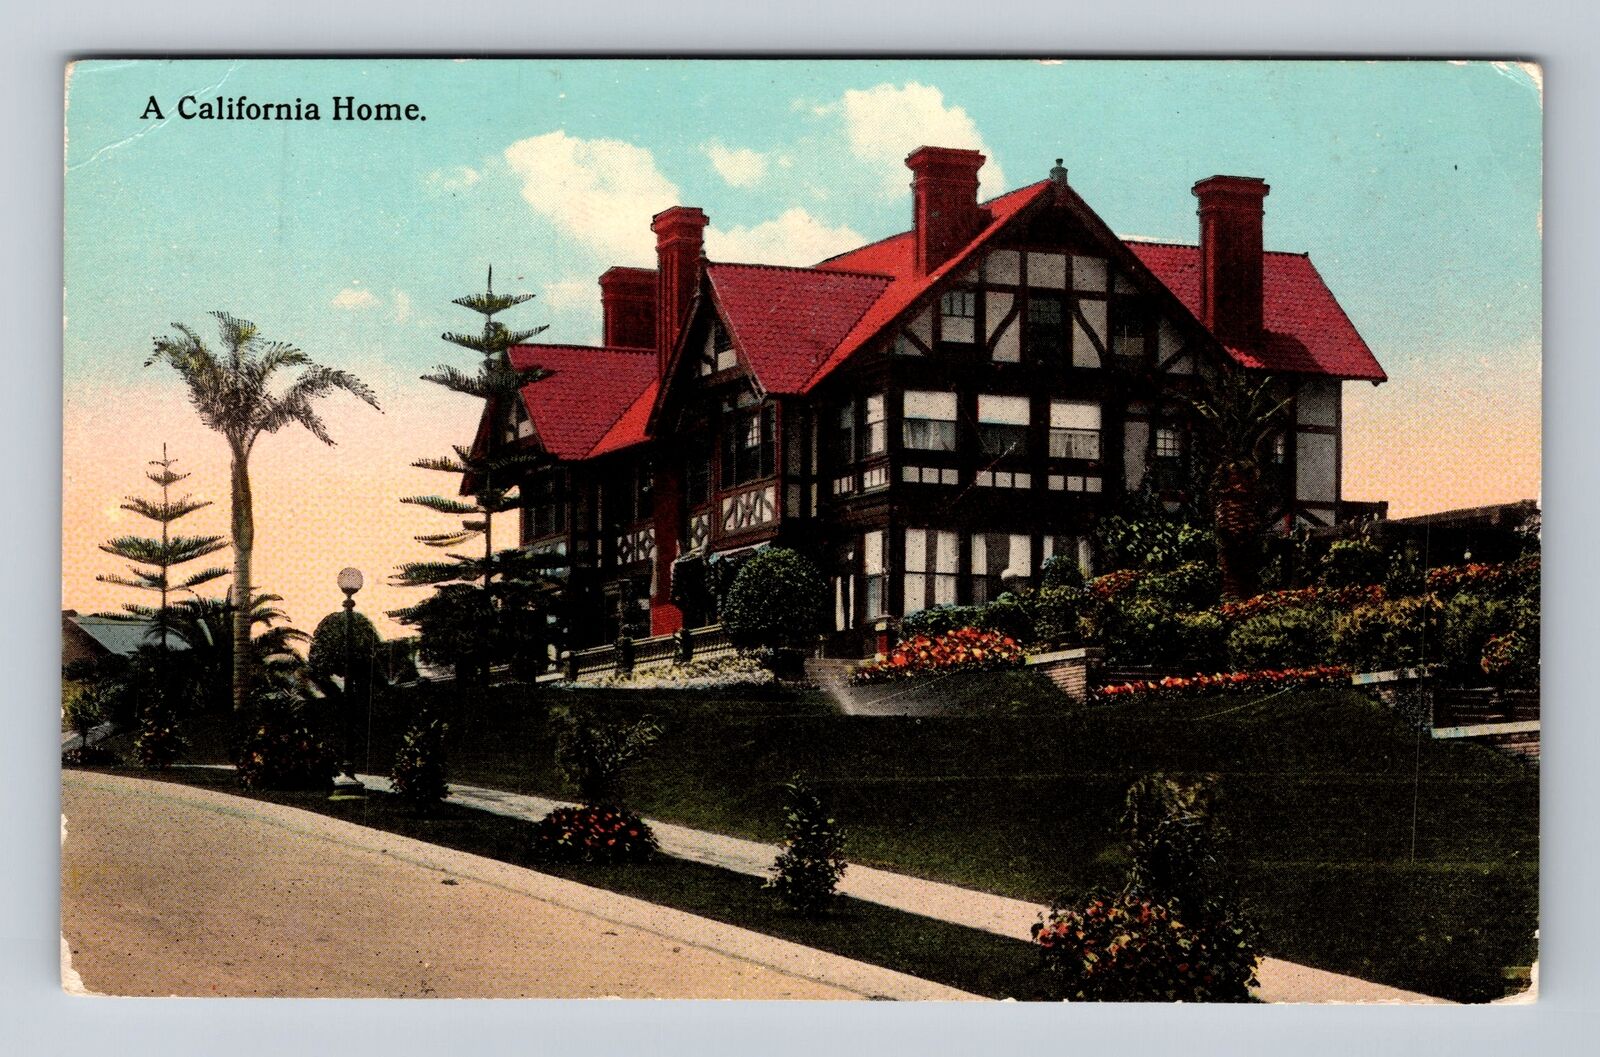 CA-California, Scenic View Residential Area, Antique Souvenir Vintage Postcard